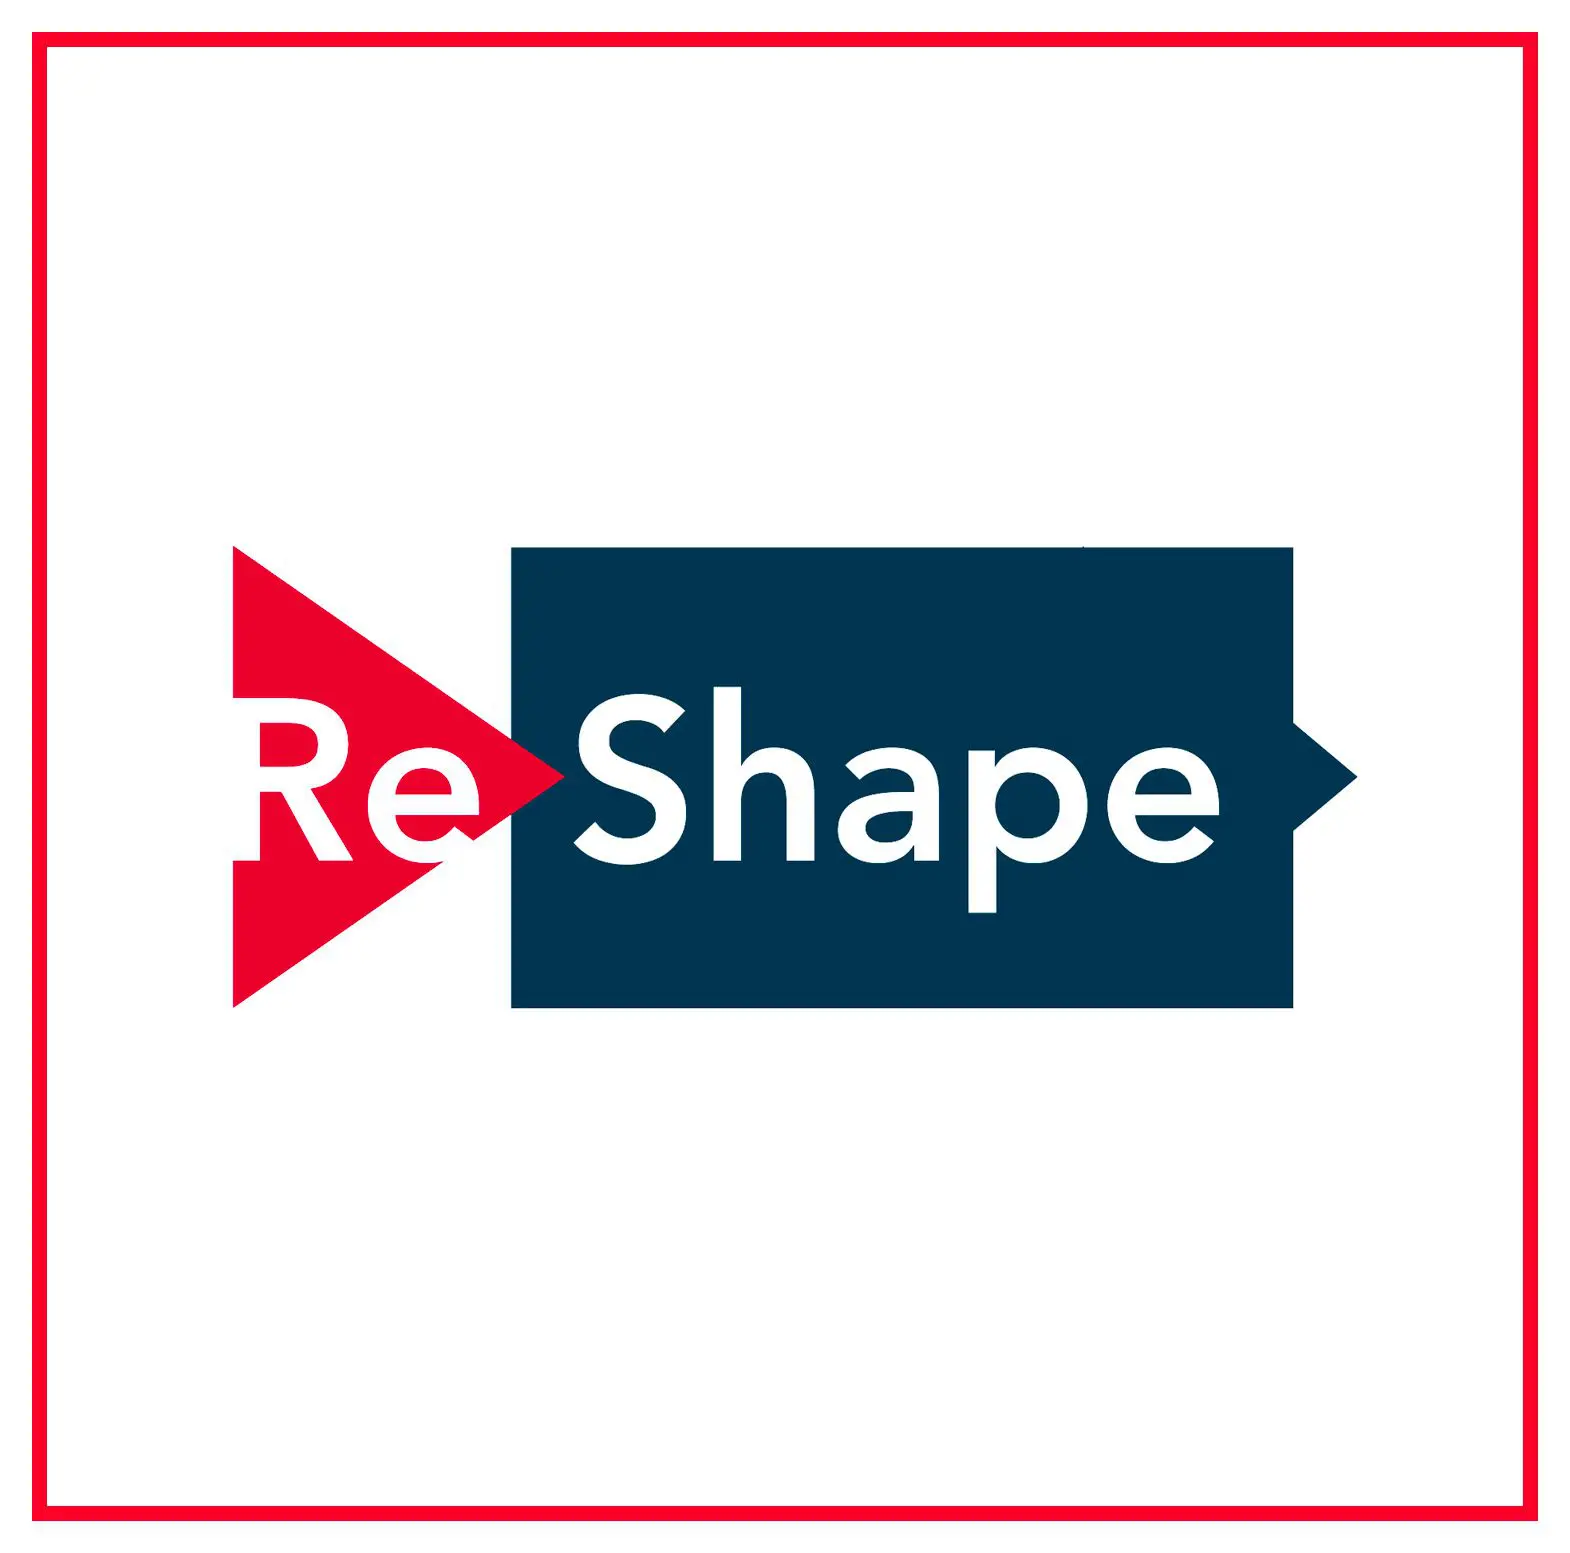 Logo ReShape Automotive Industry